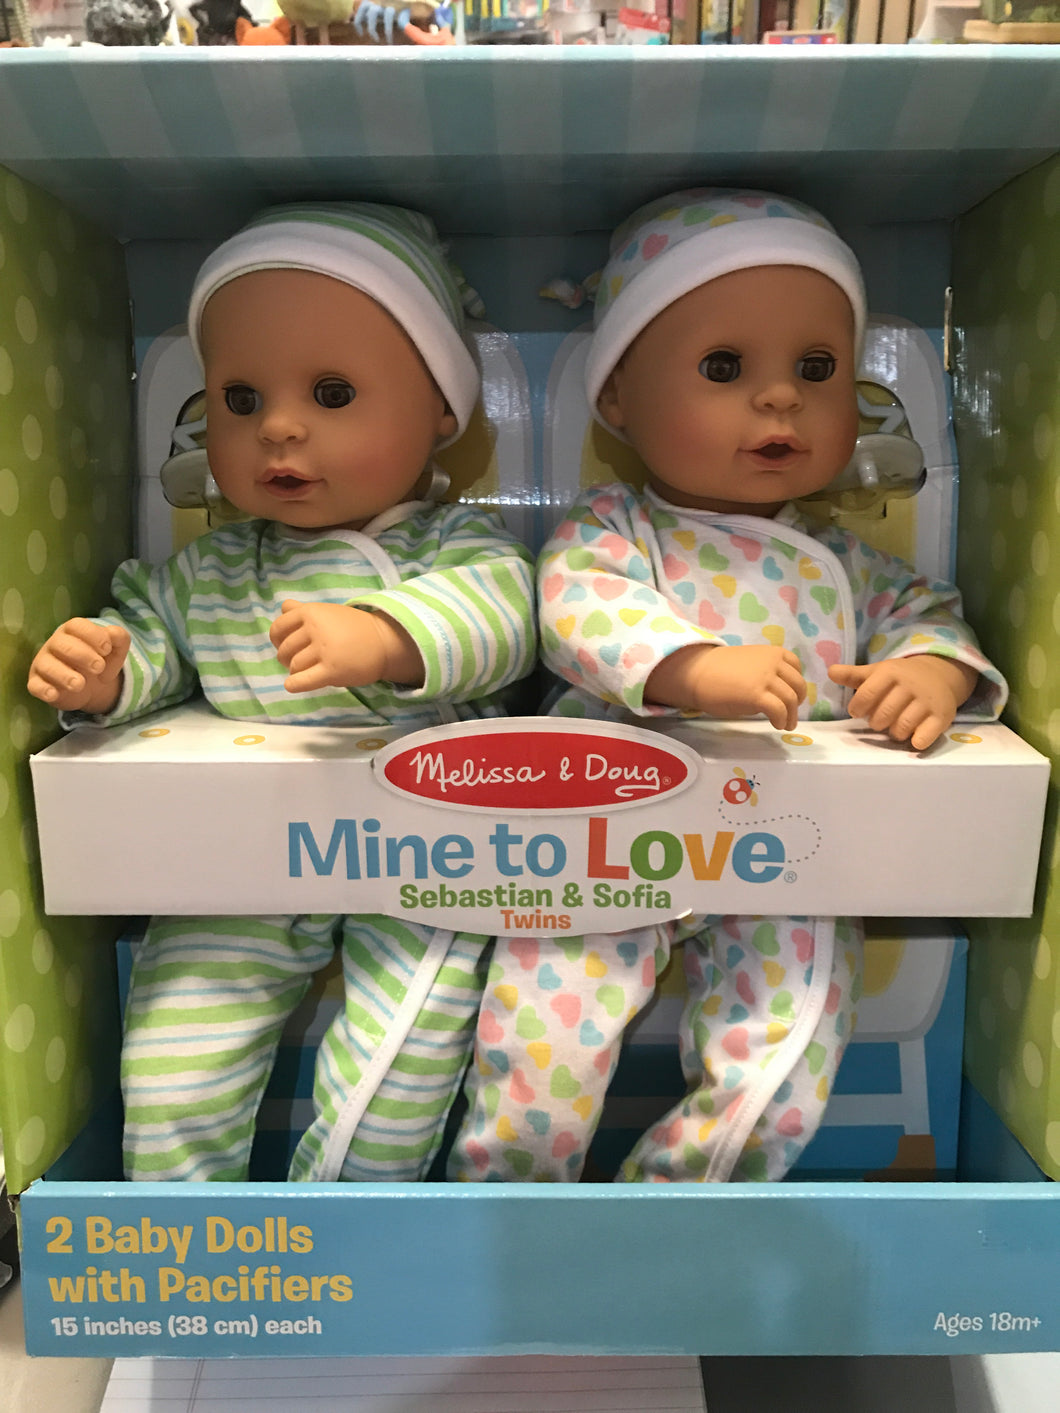 Melissa & Doug - Mine to Love Twins Luke & Lucy Dolls